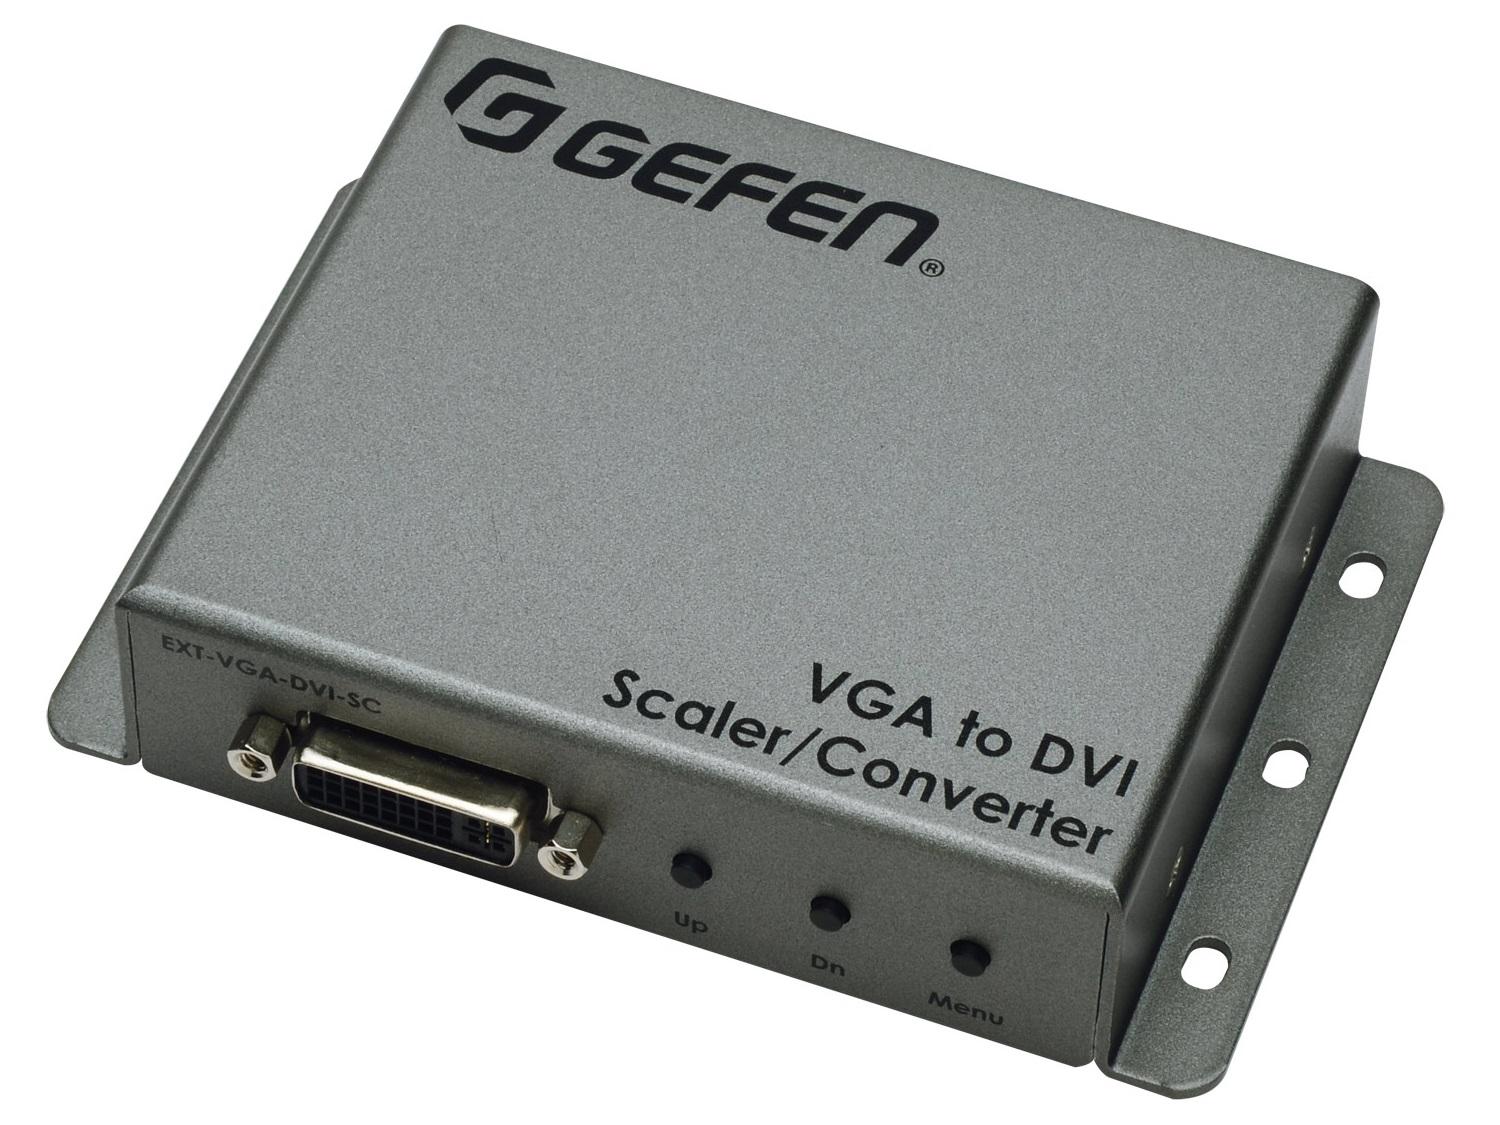 EXT-VGA-DVI-SC VGA to DVI Scaler / Converter by Gefen